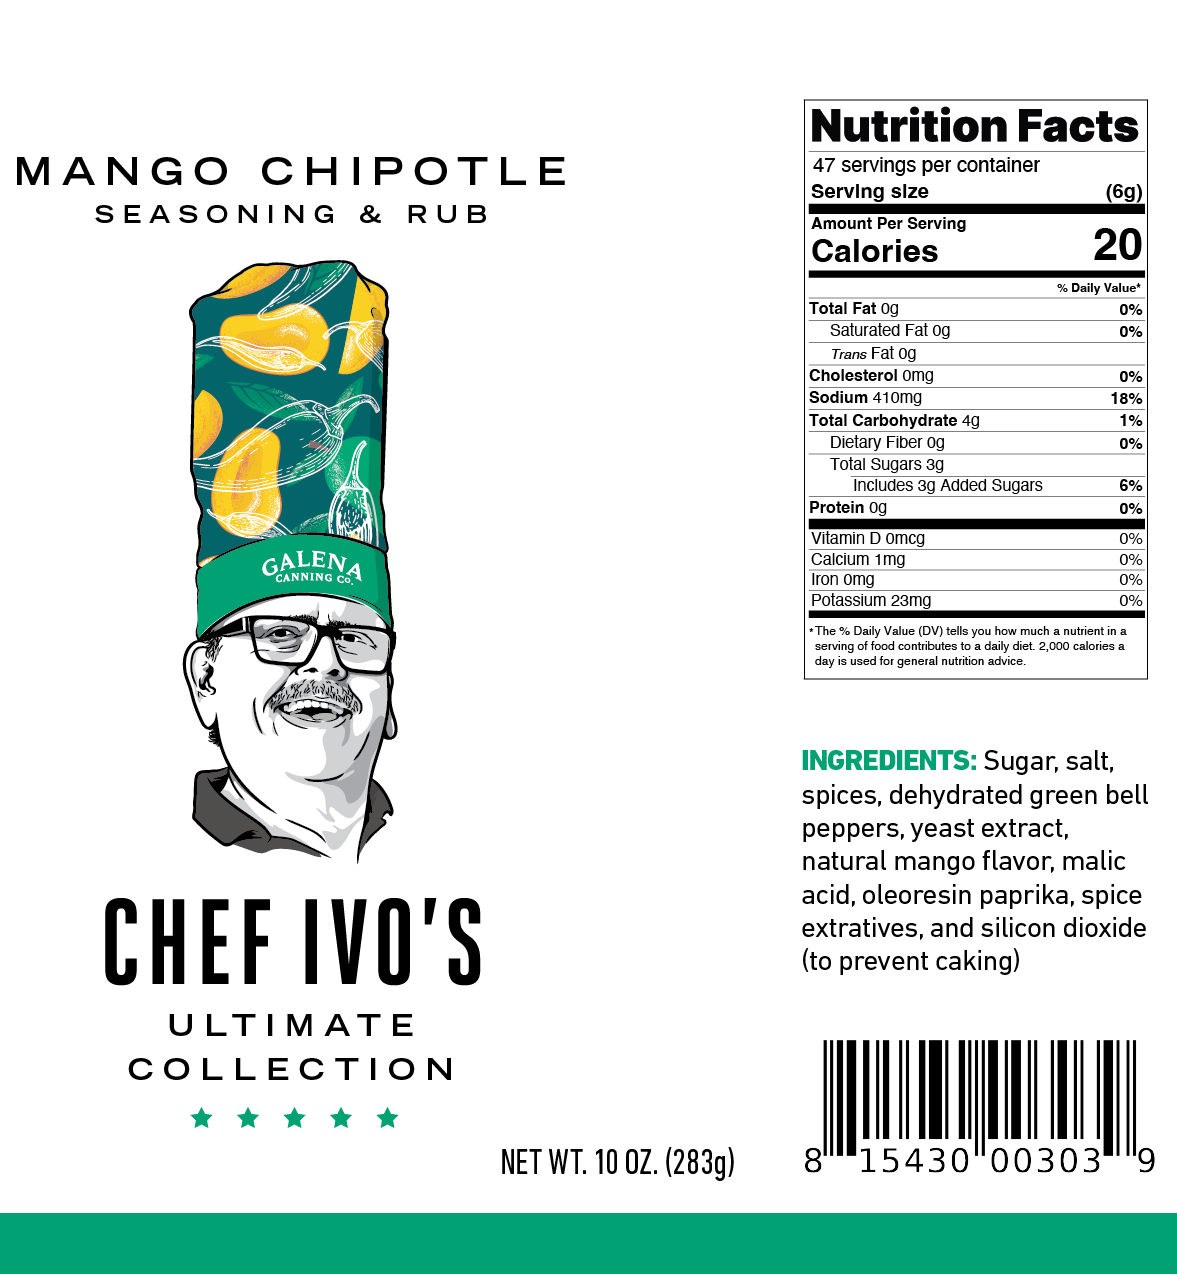 Chef Ivo's Ultimate Tropical Mango Chipotle Rub